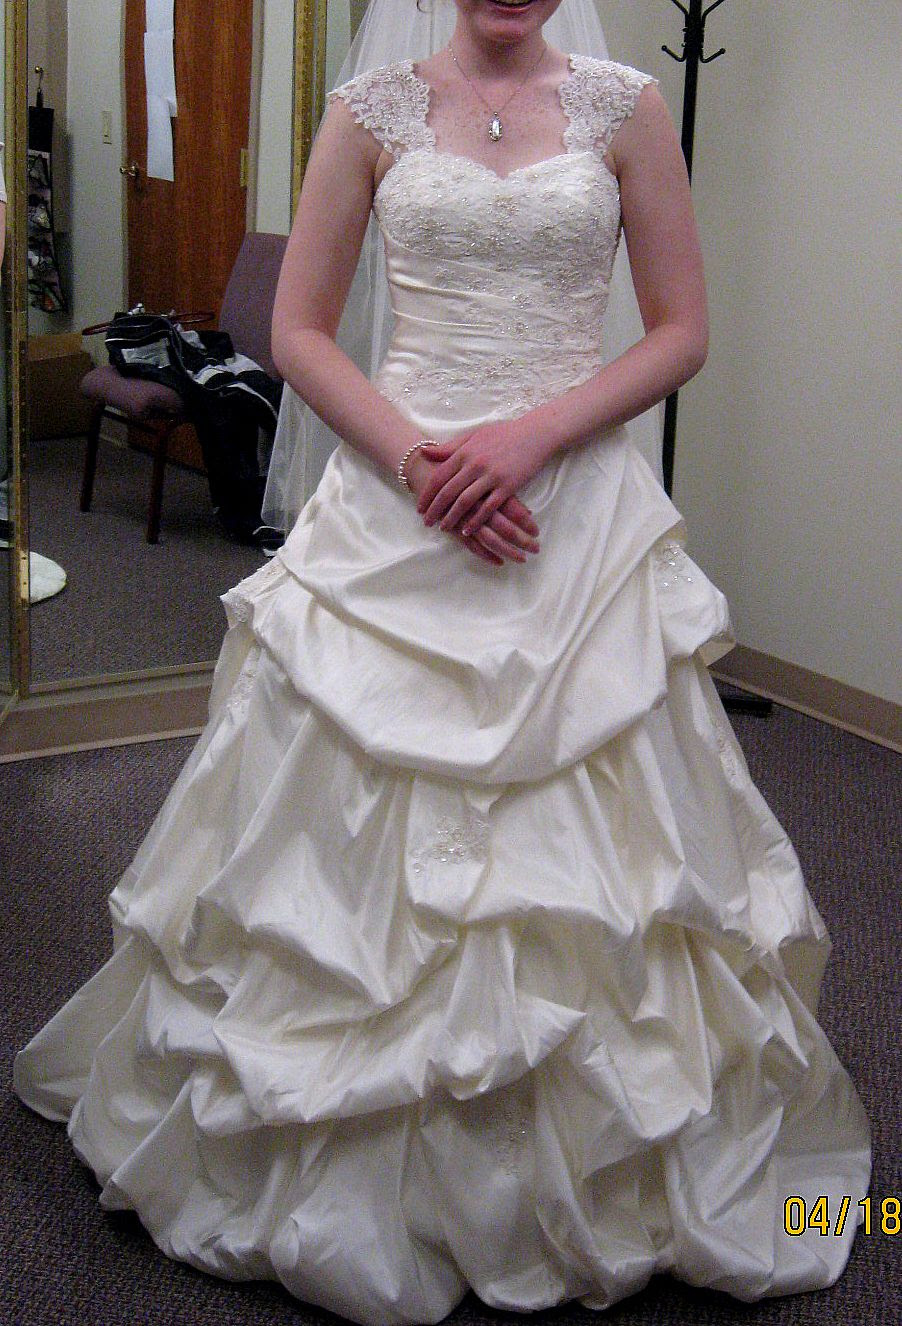  Wedding  Dress  Consignment  pict pict pict